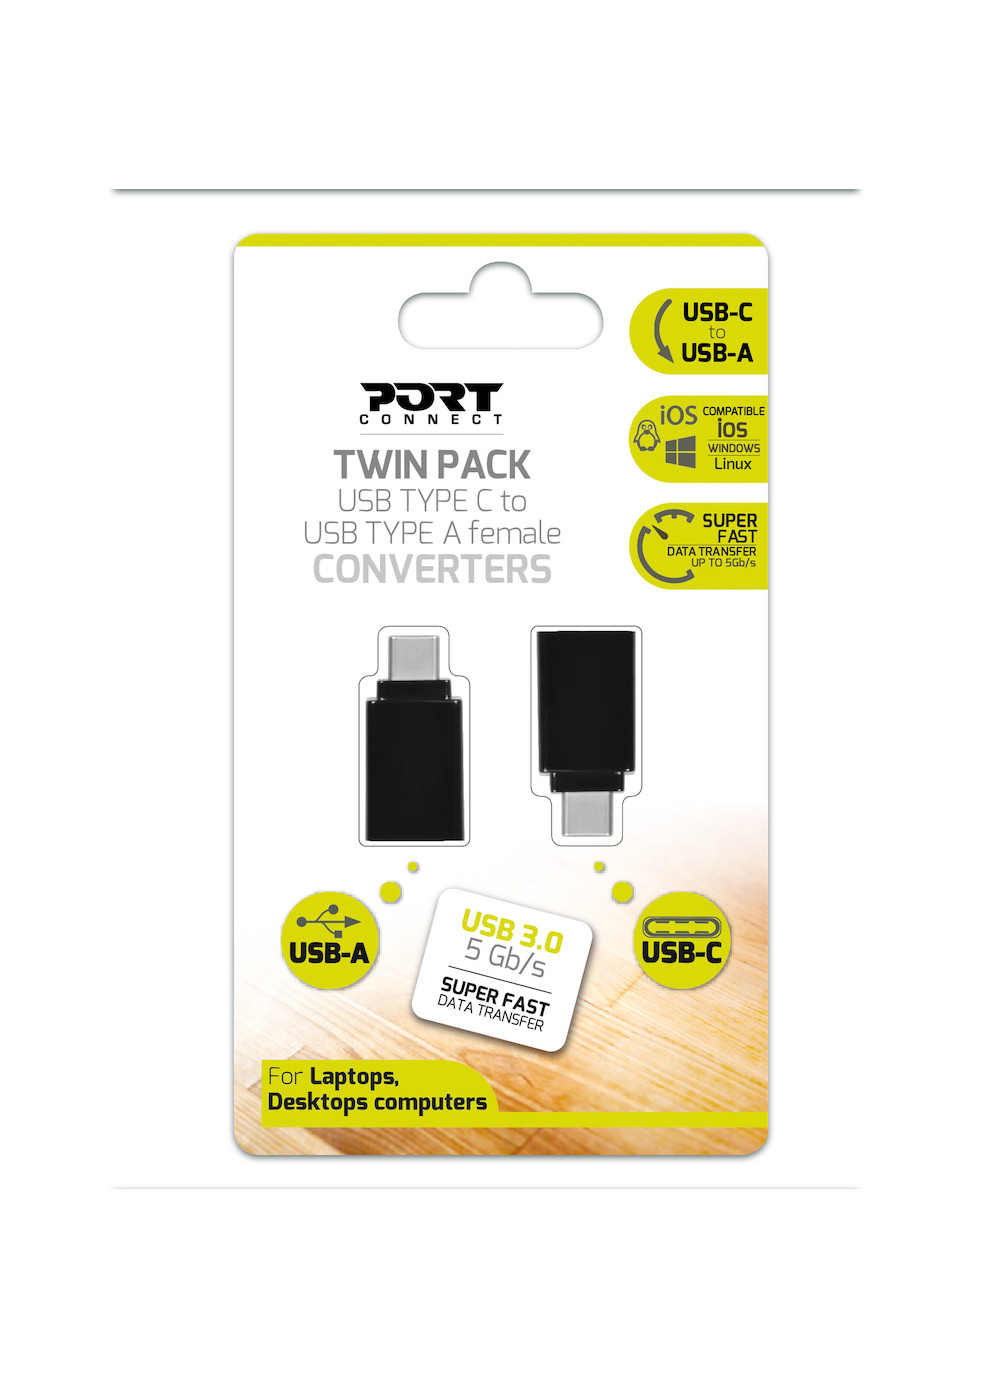 PORT Designs PORT Connect - USB-Adapter - USB Typ A (W) zu 24 pin USB-C (M)